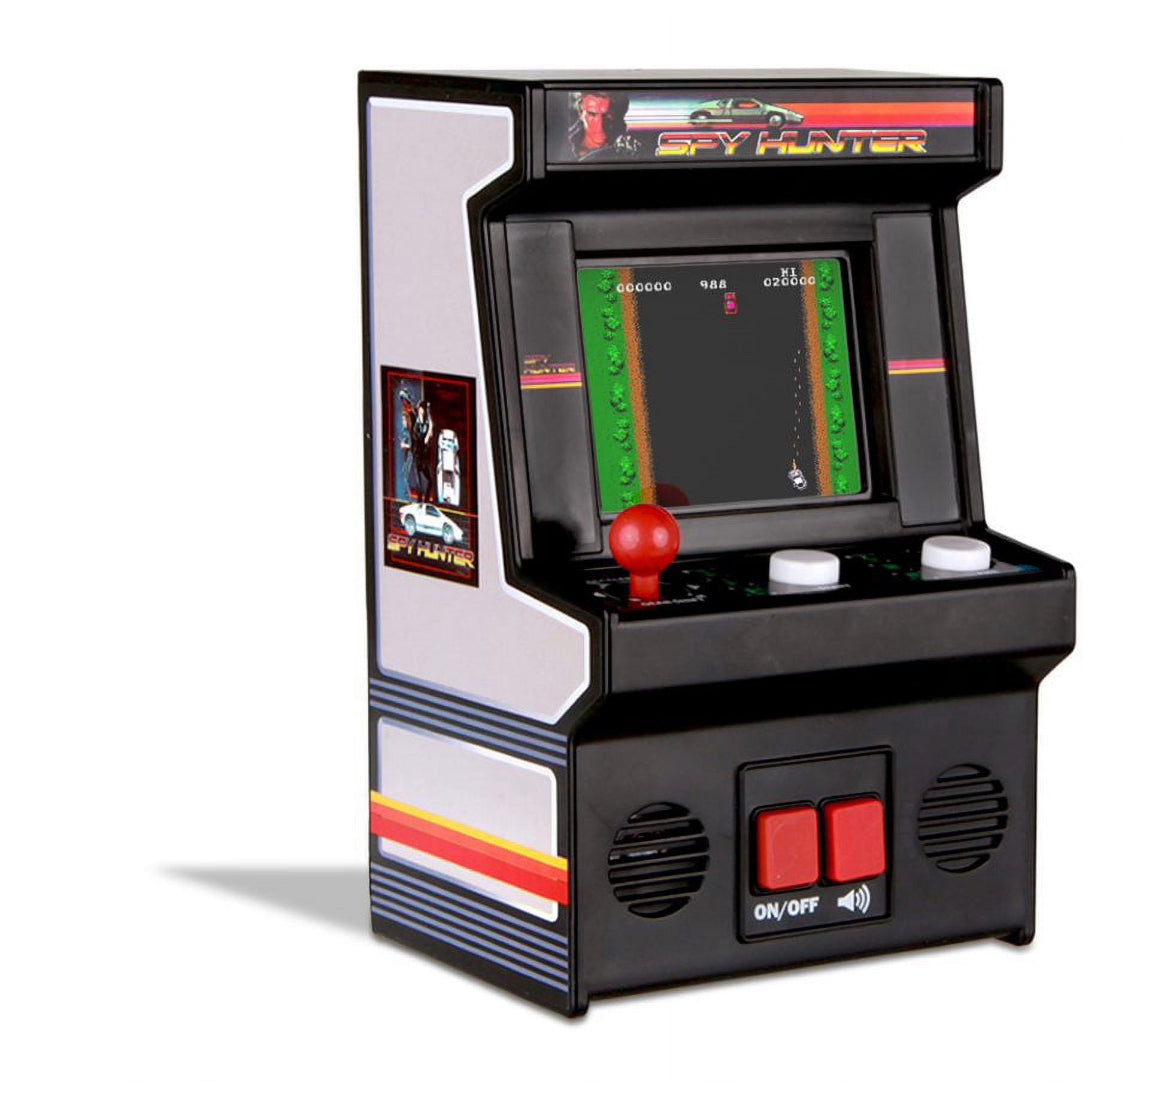 Arcade Classics - Spy Hunter Retro Mini Arcade Game